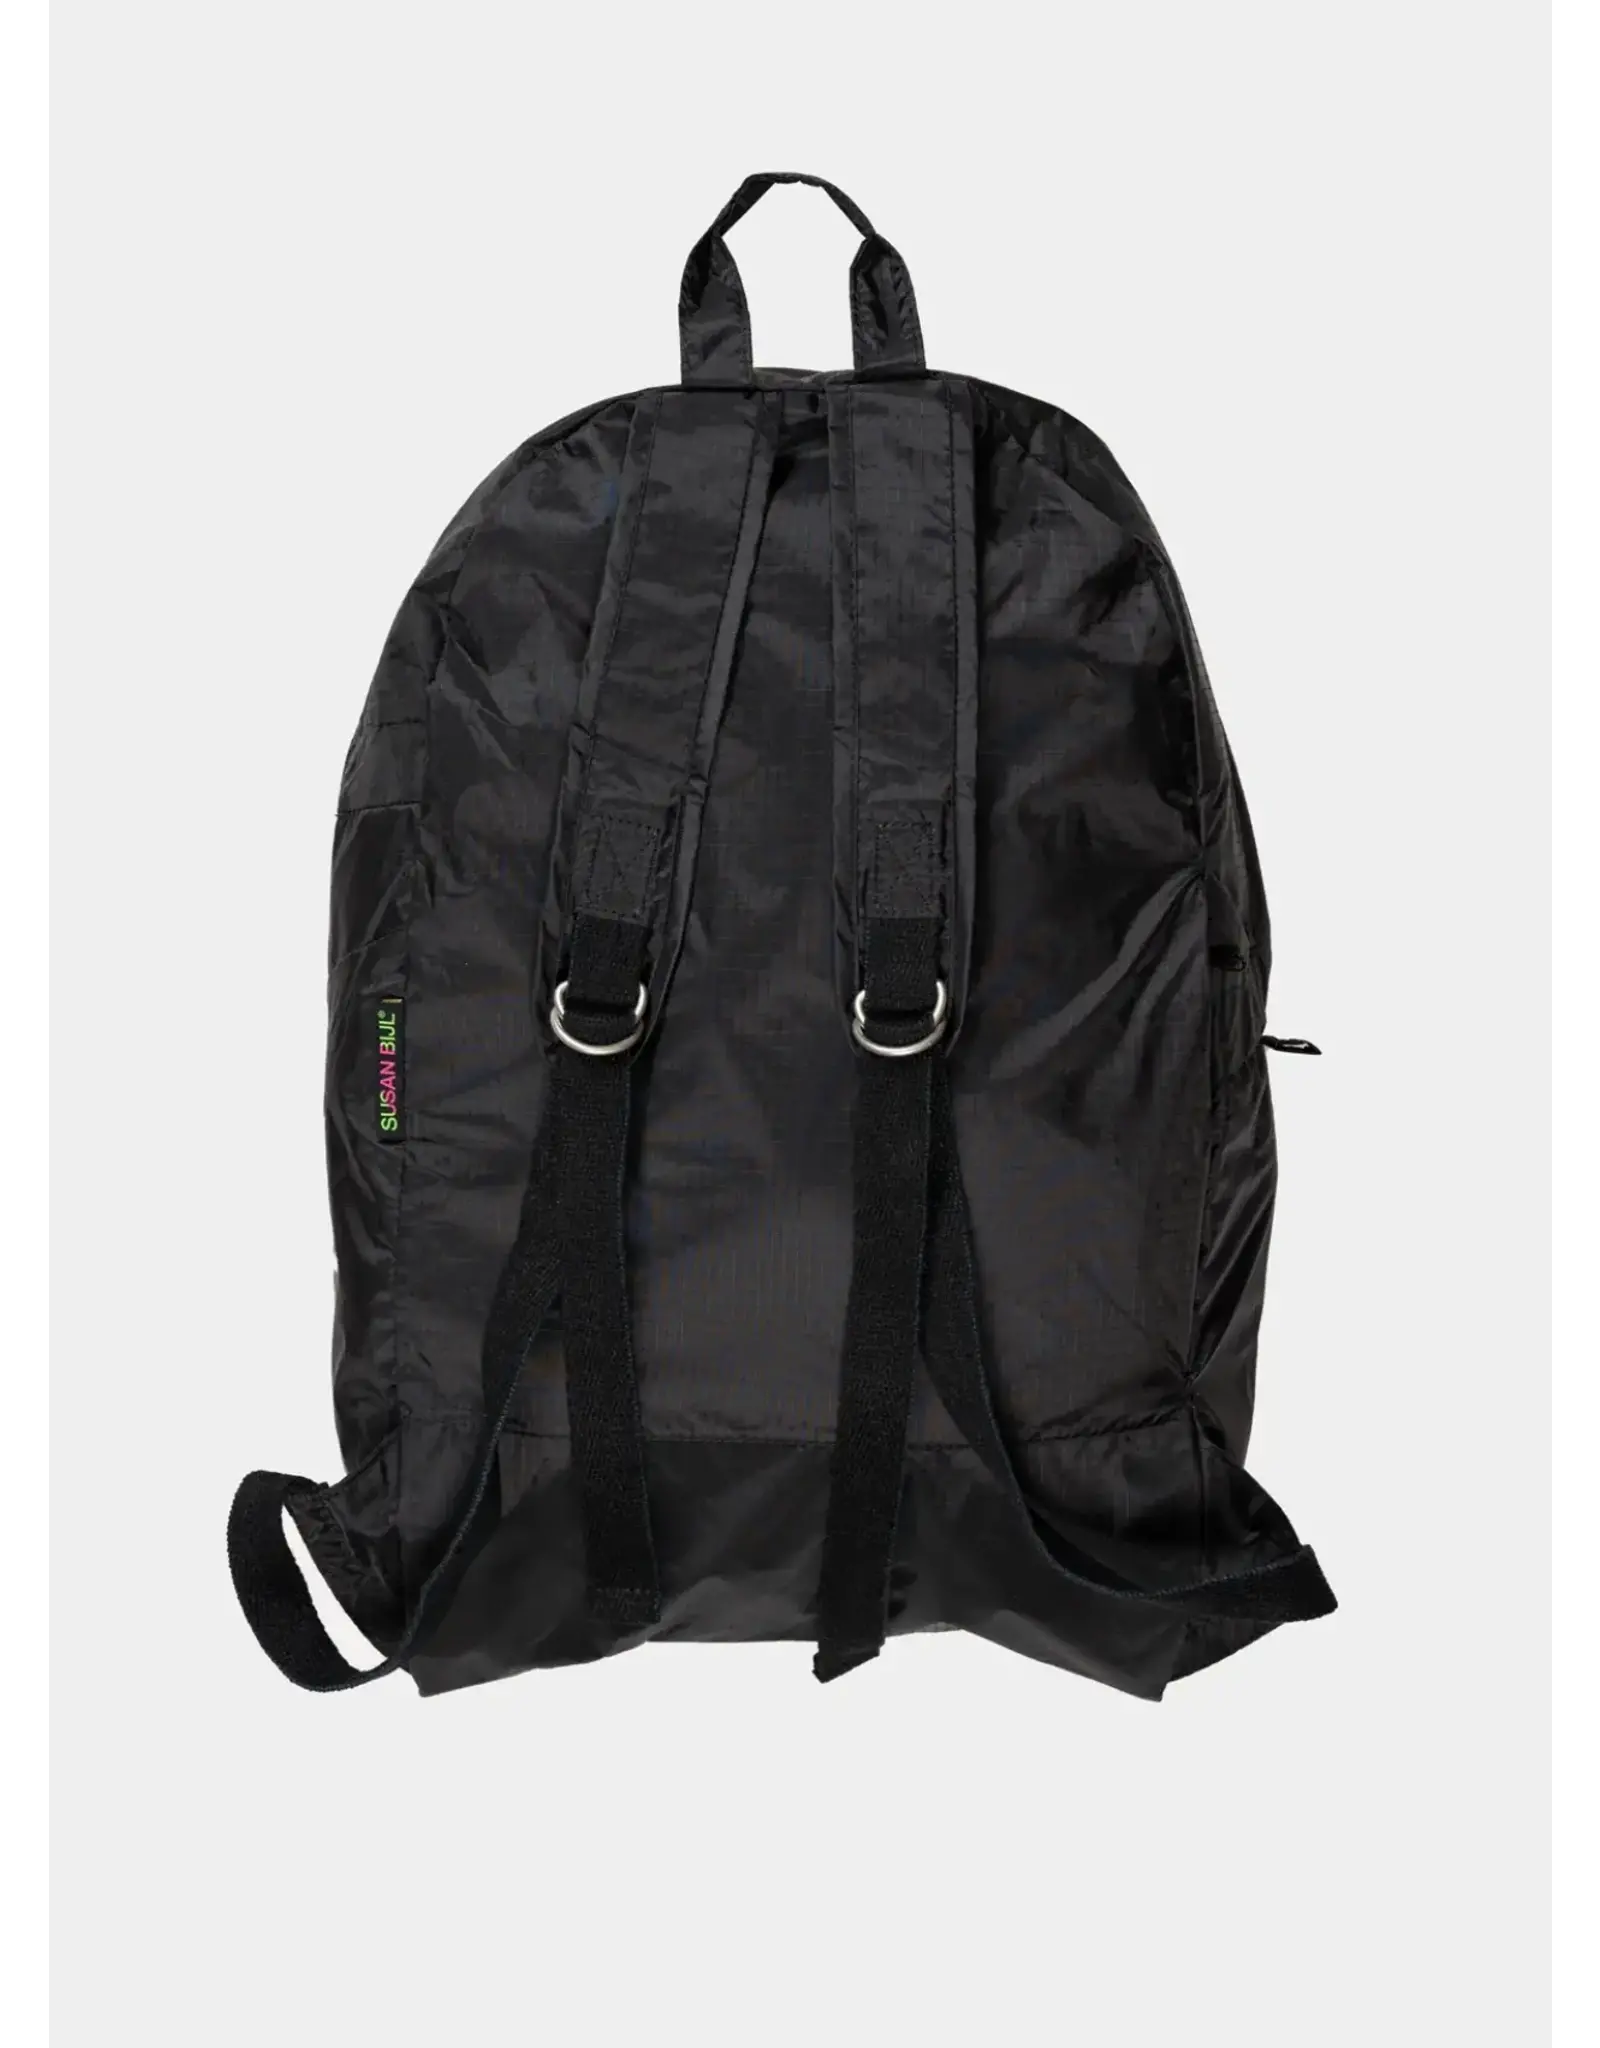 Susan Bijl Foldable Backpack L, Black & Black - 54 x 28 x 15 cm